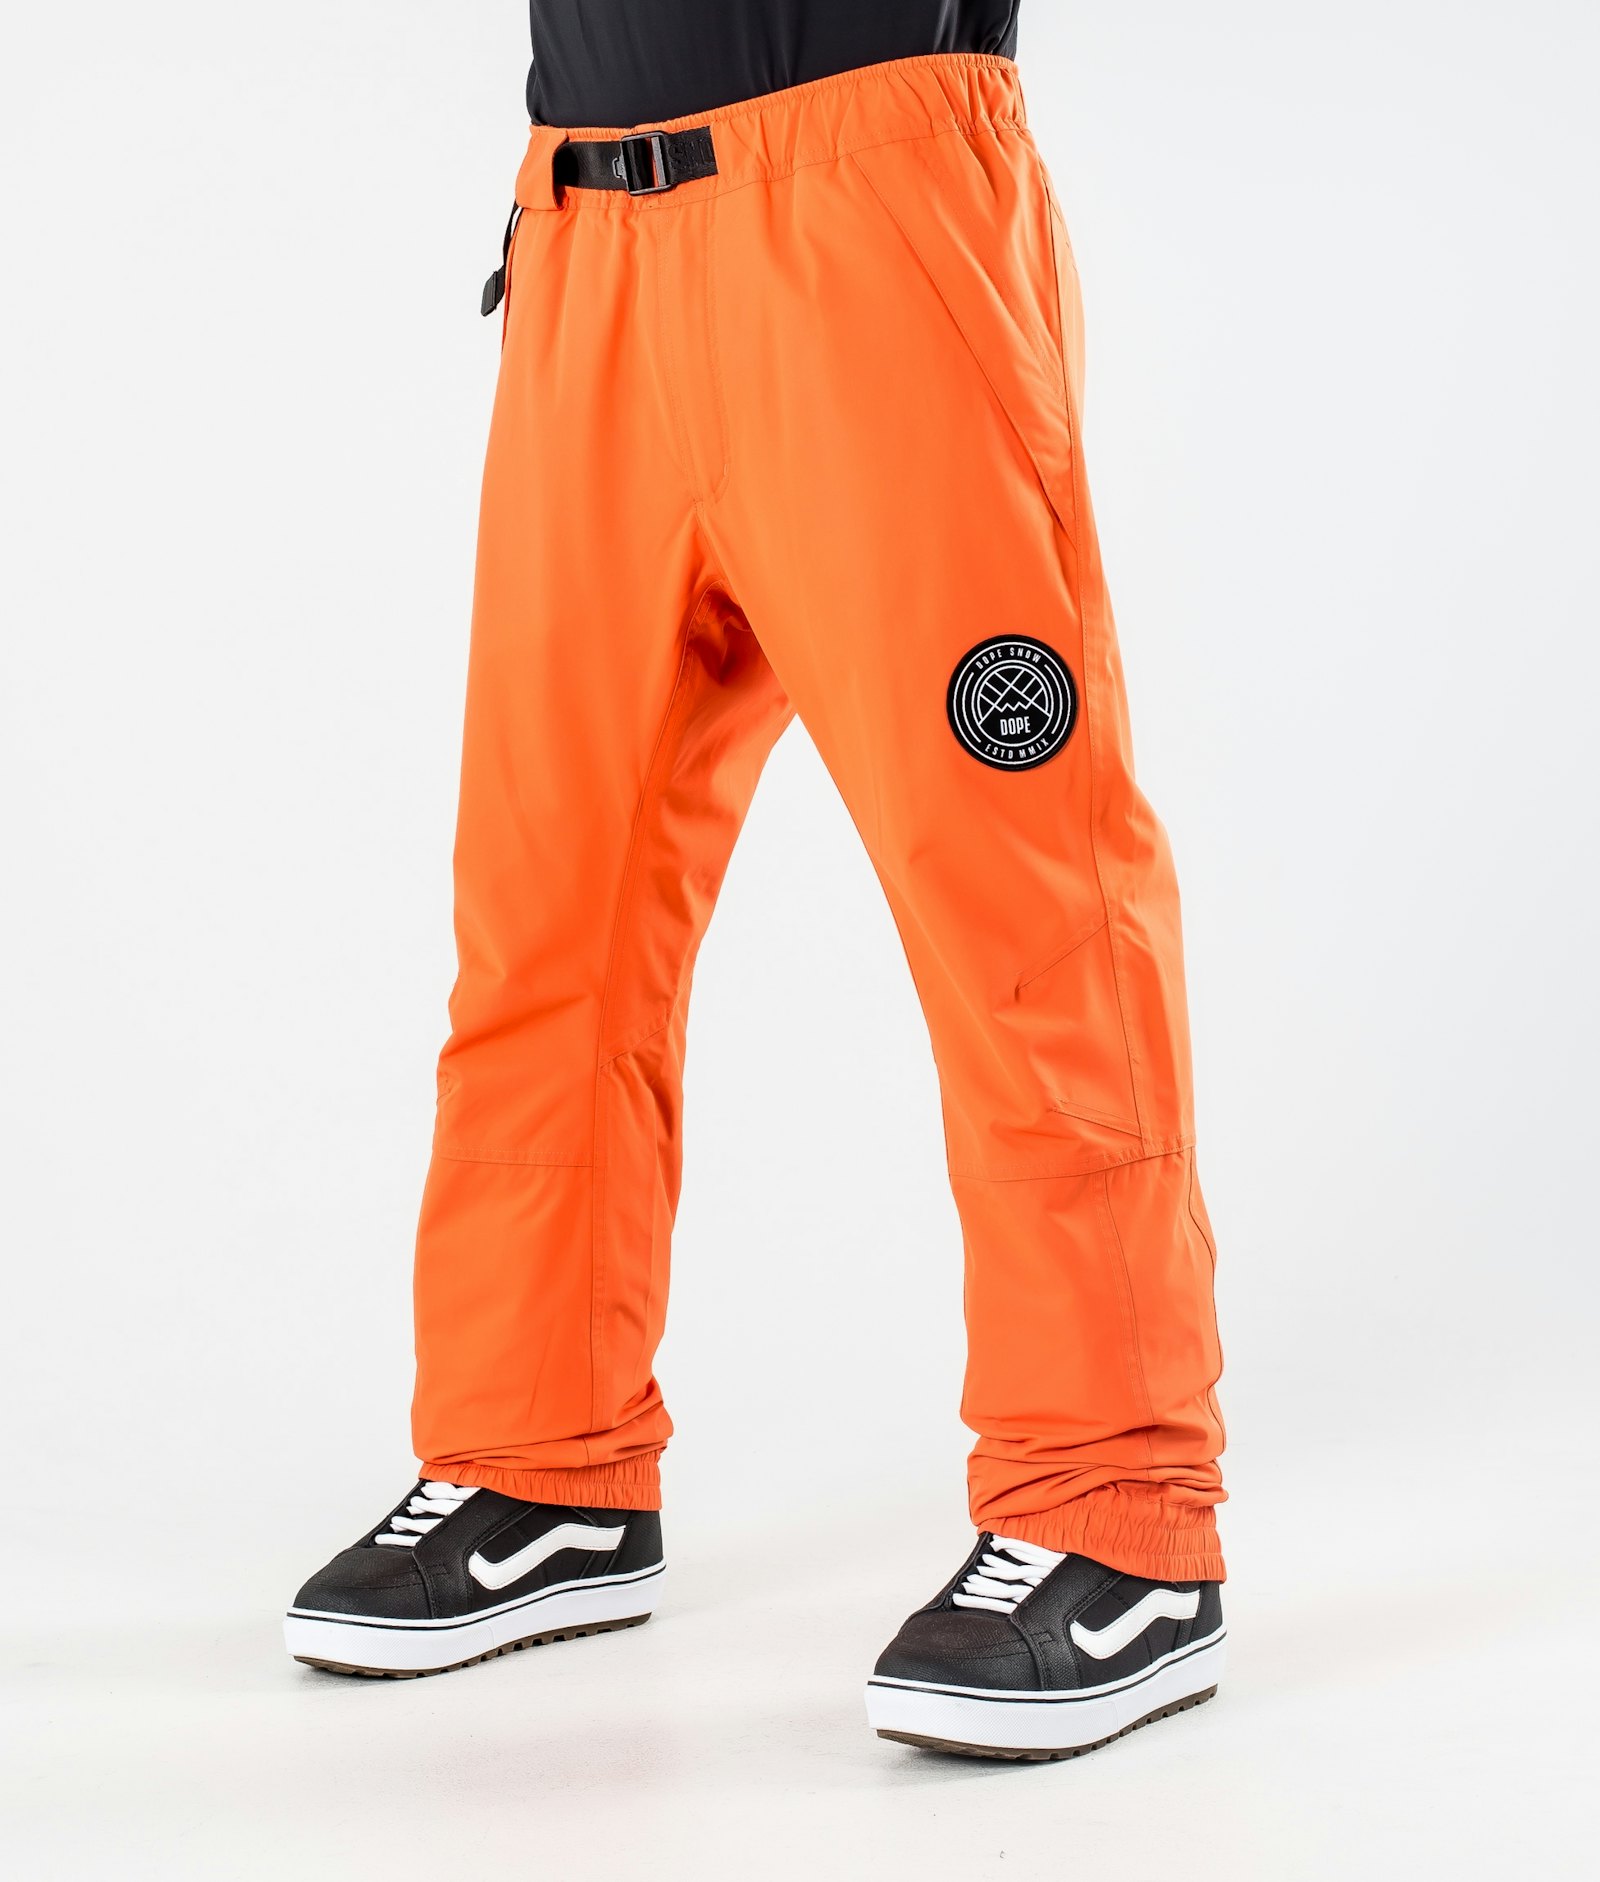 Dope Blizzard 2020 Pantaloni Snowboard Uomo Orange